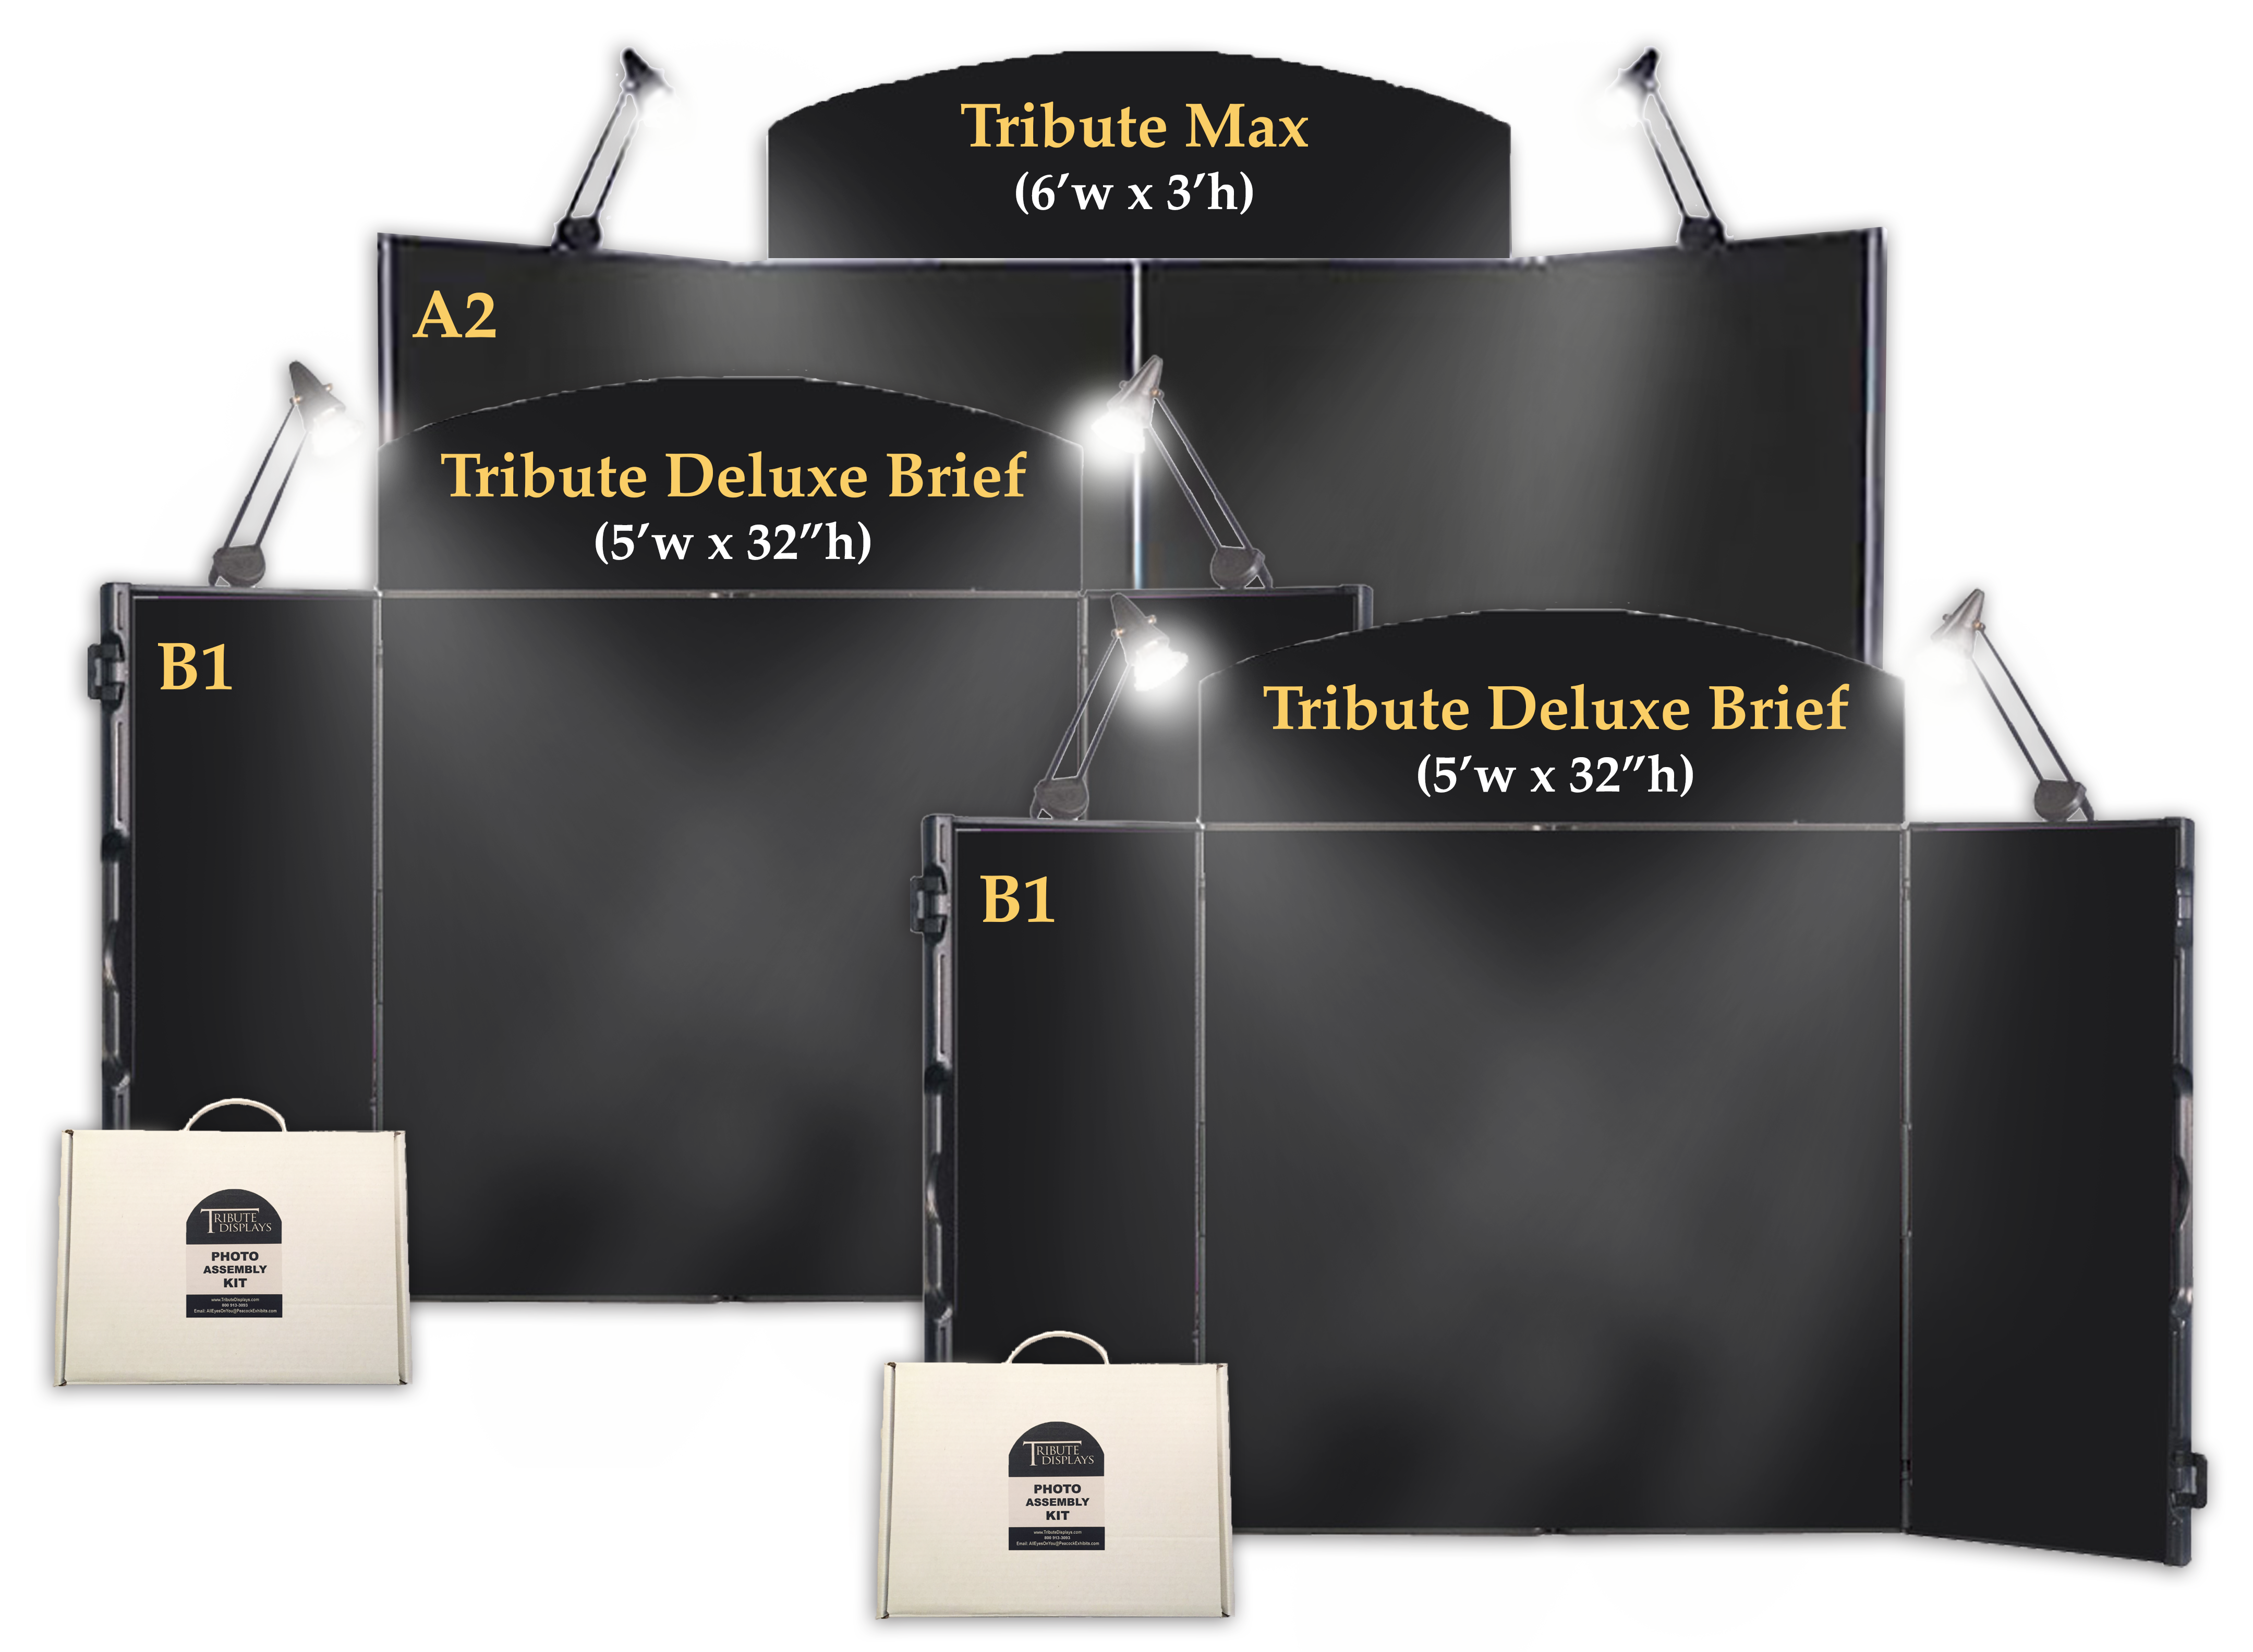 System Bundle "ABB": Tribute "Triple" (Max + Double Deluxe)